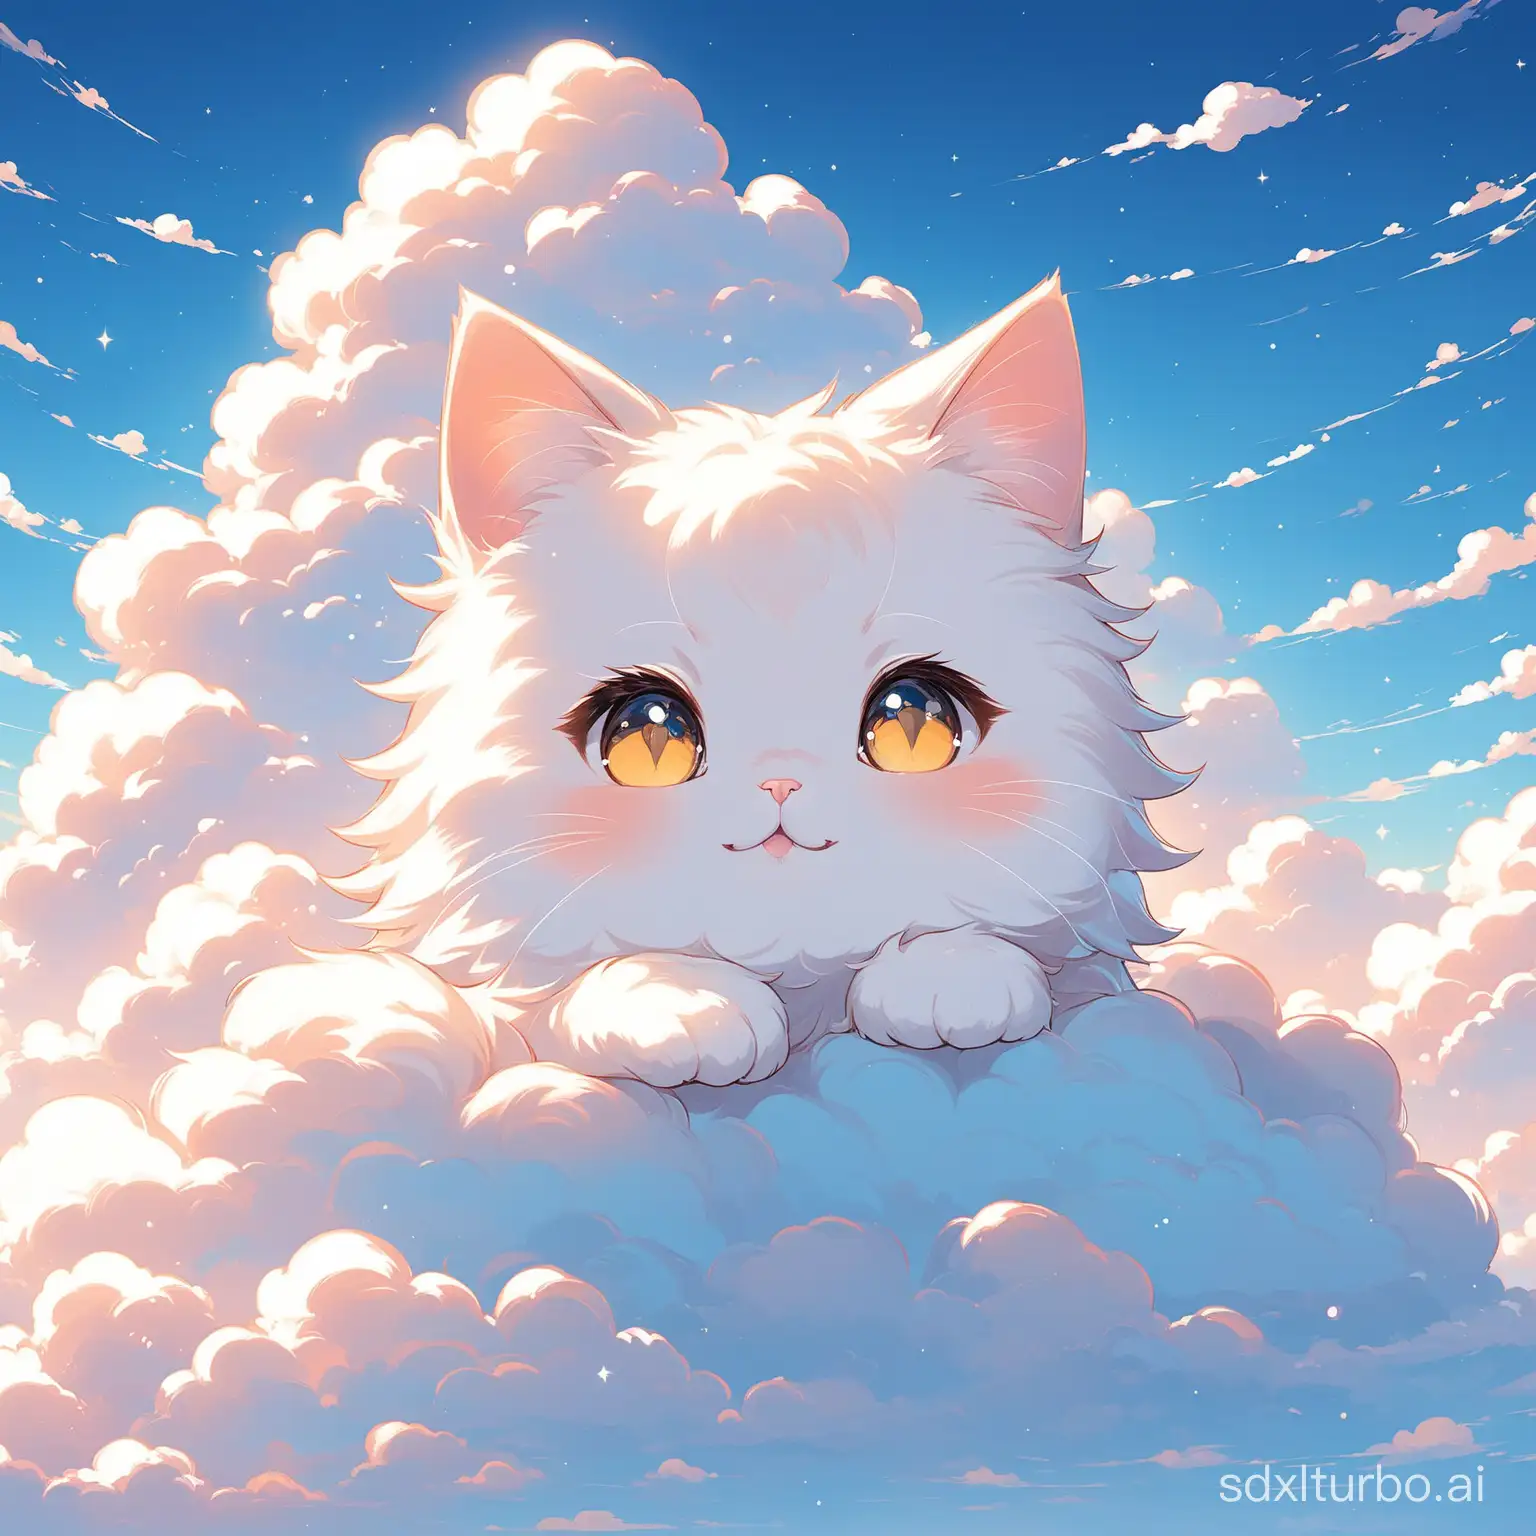 Adorable-Cloud-Little-Cat-Floating-in-Dreamy-Sky